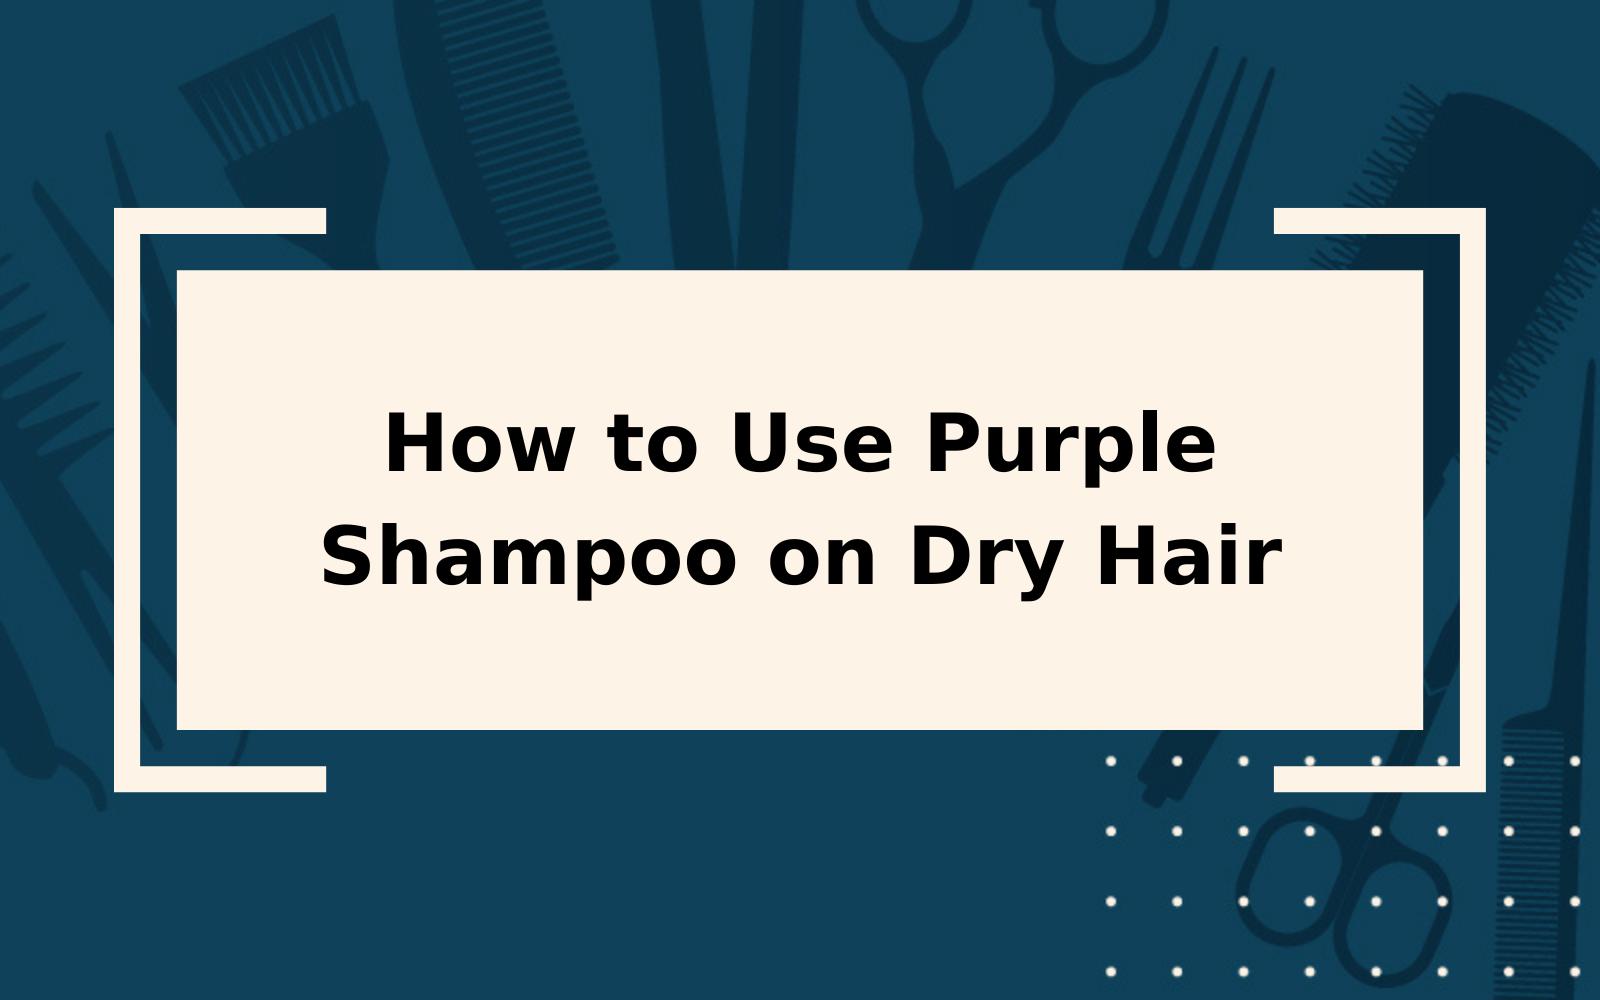 How to Use Purple Shampoo on Dry Hair